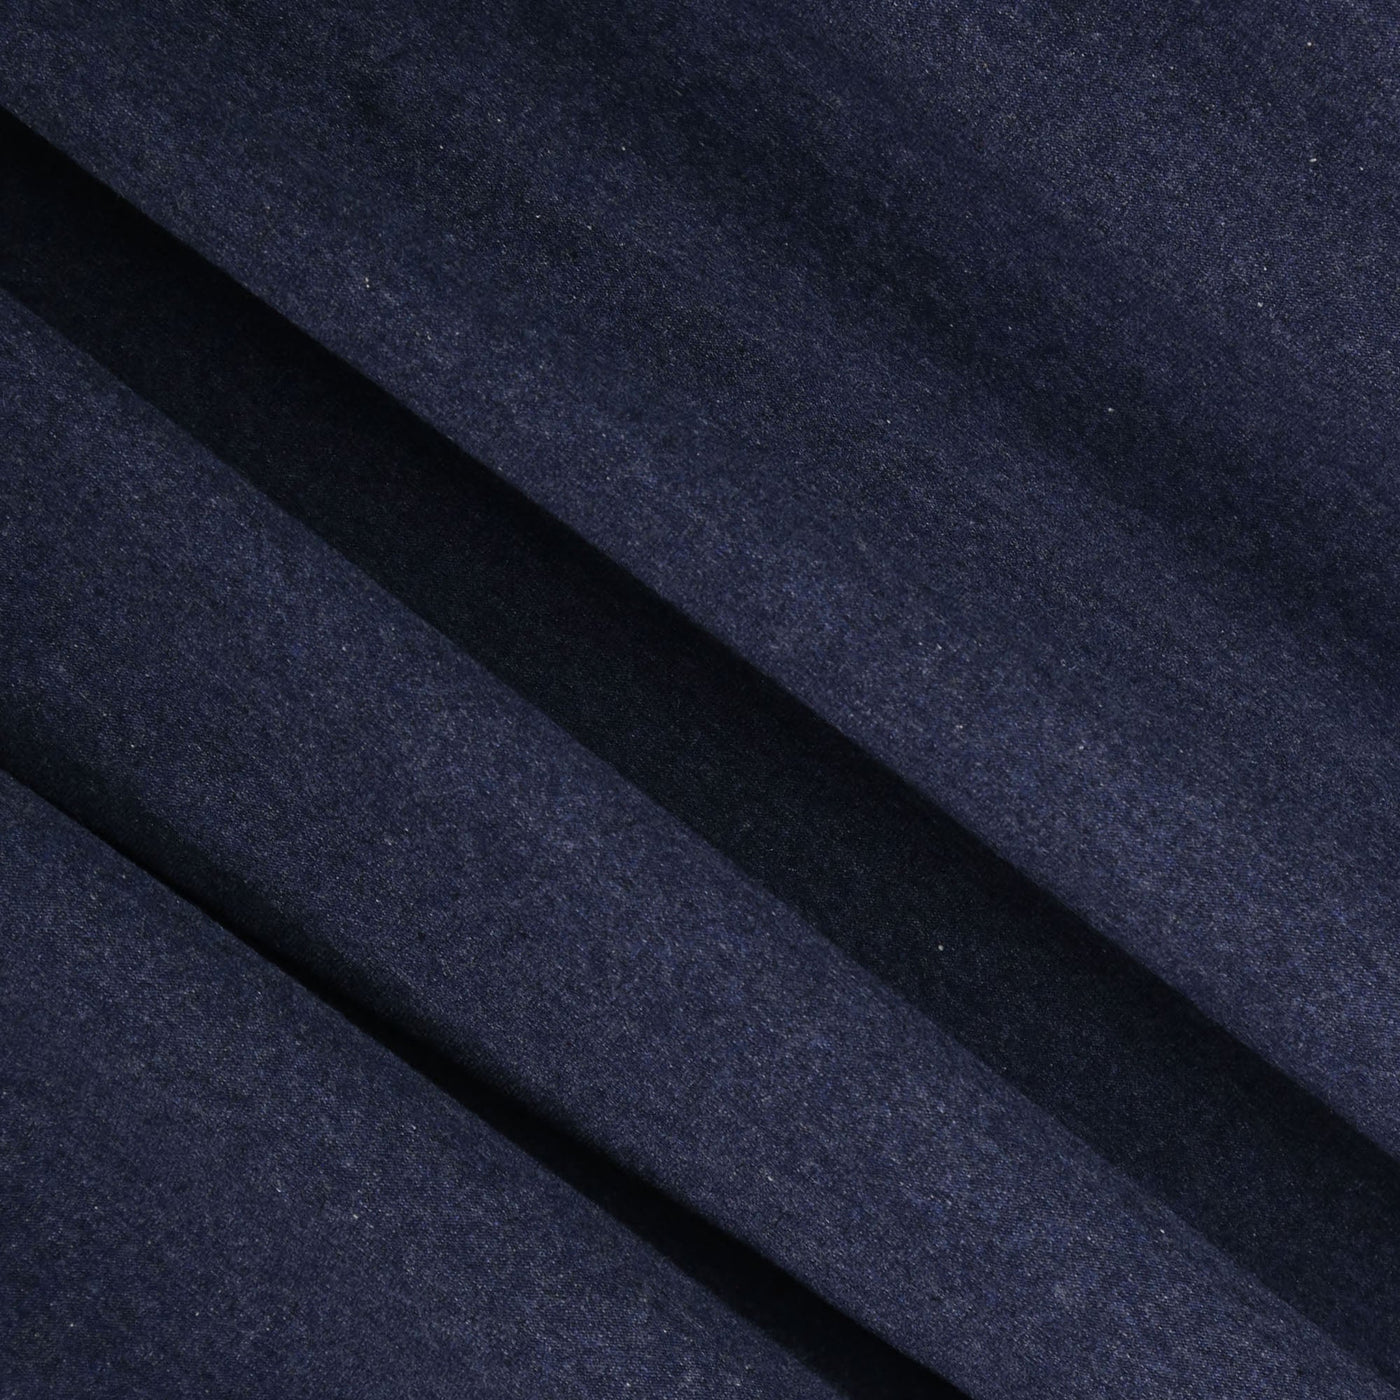 12oz Turkish Cotton Spandex Jersey Fabric | Denim Navy | FabricLA.com 